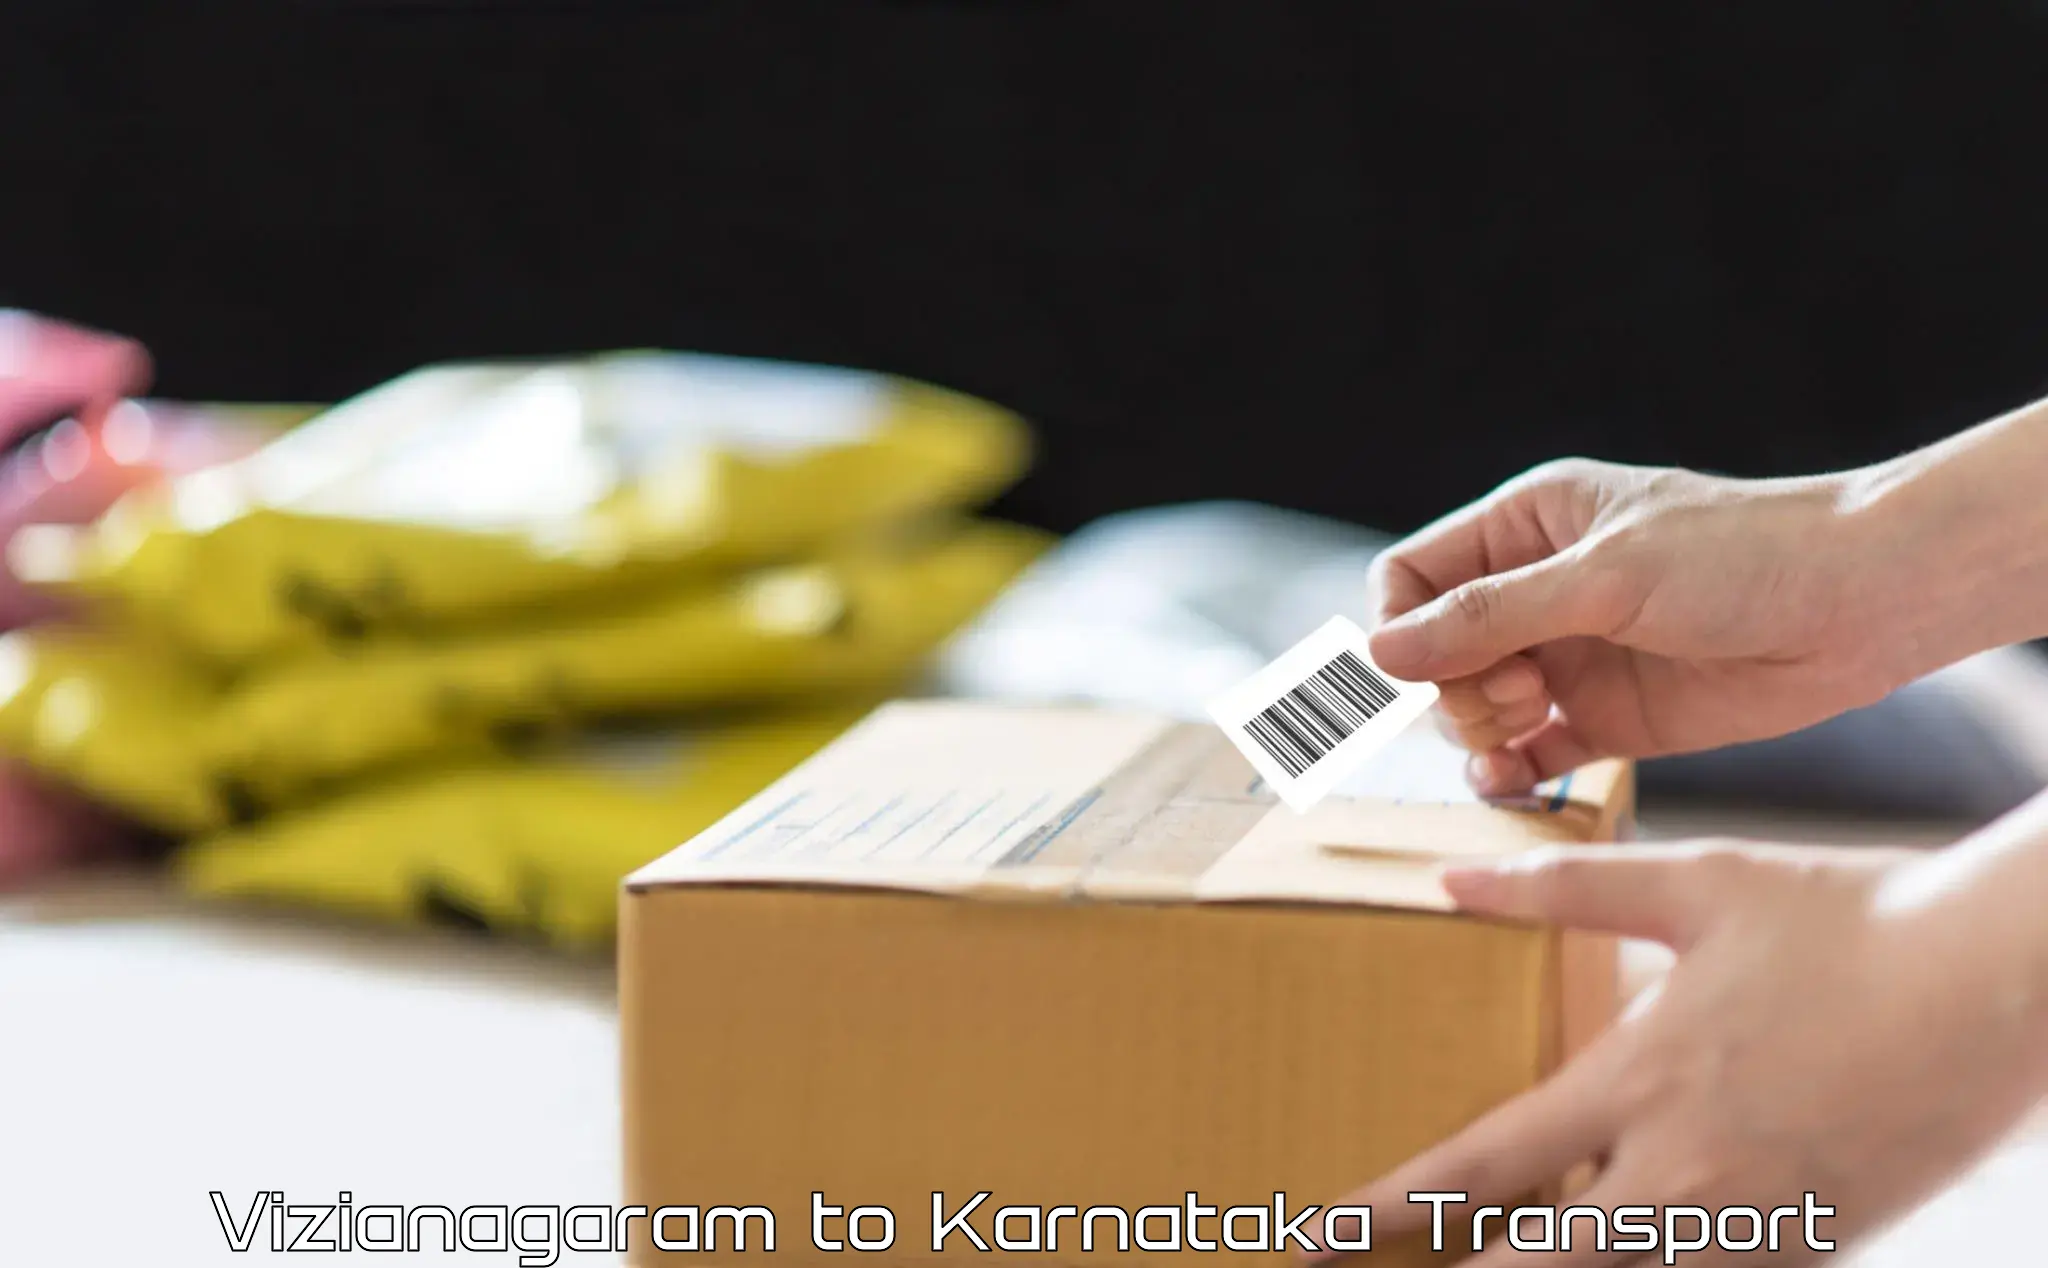 Shipping partner Vizianagaram to Karnataka